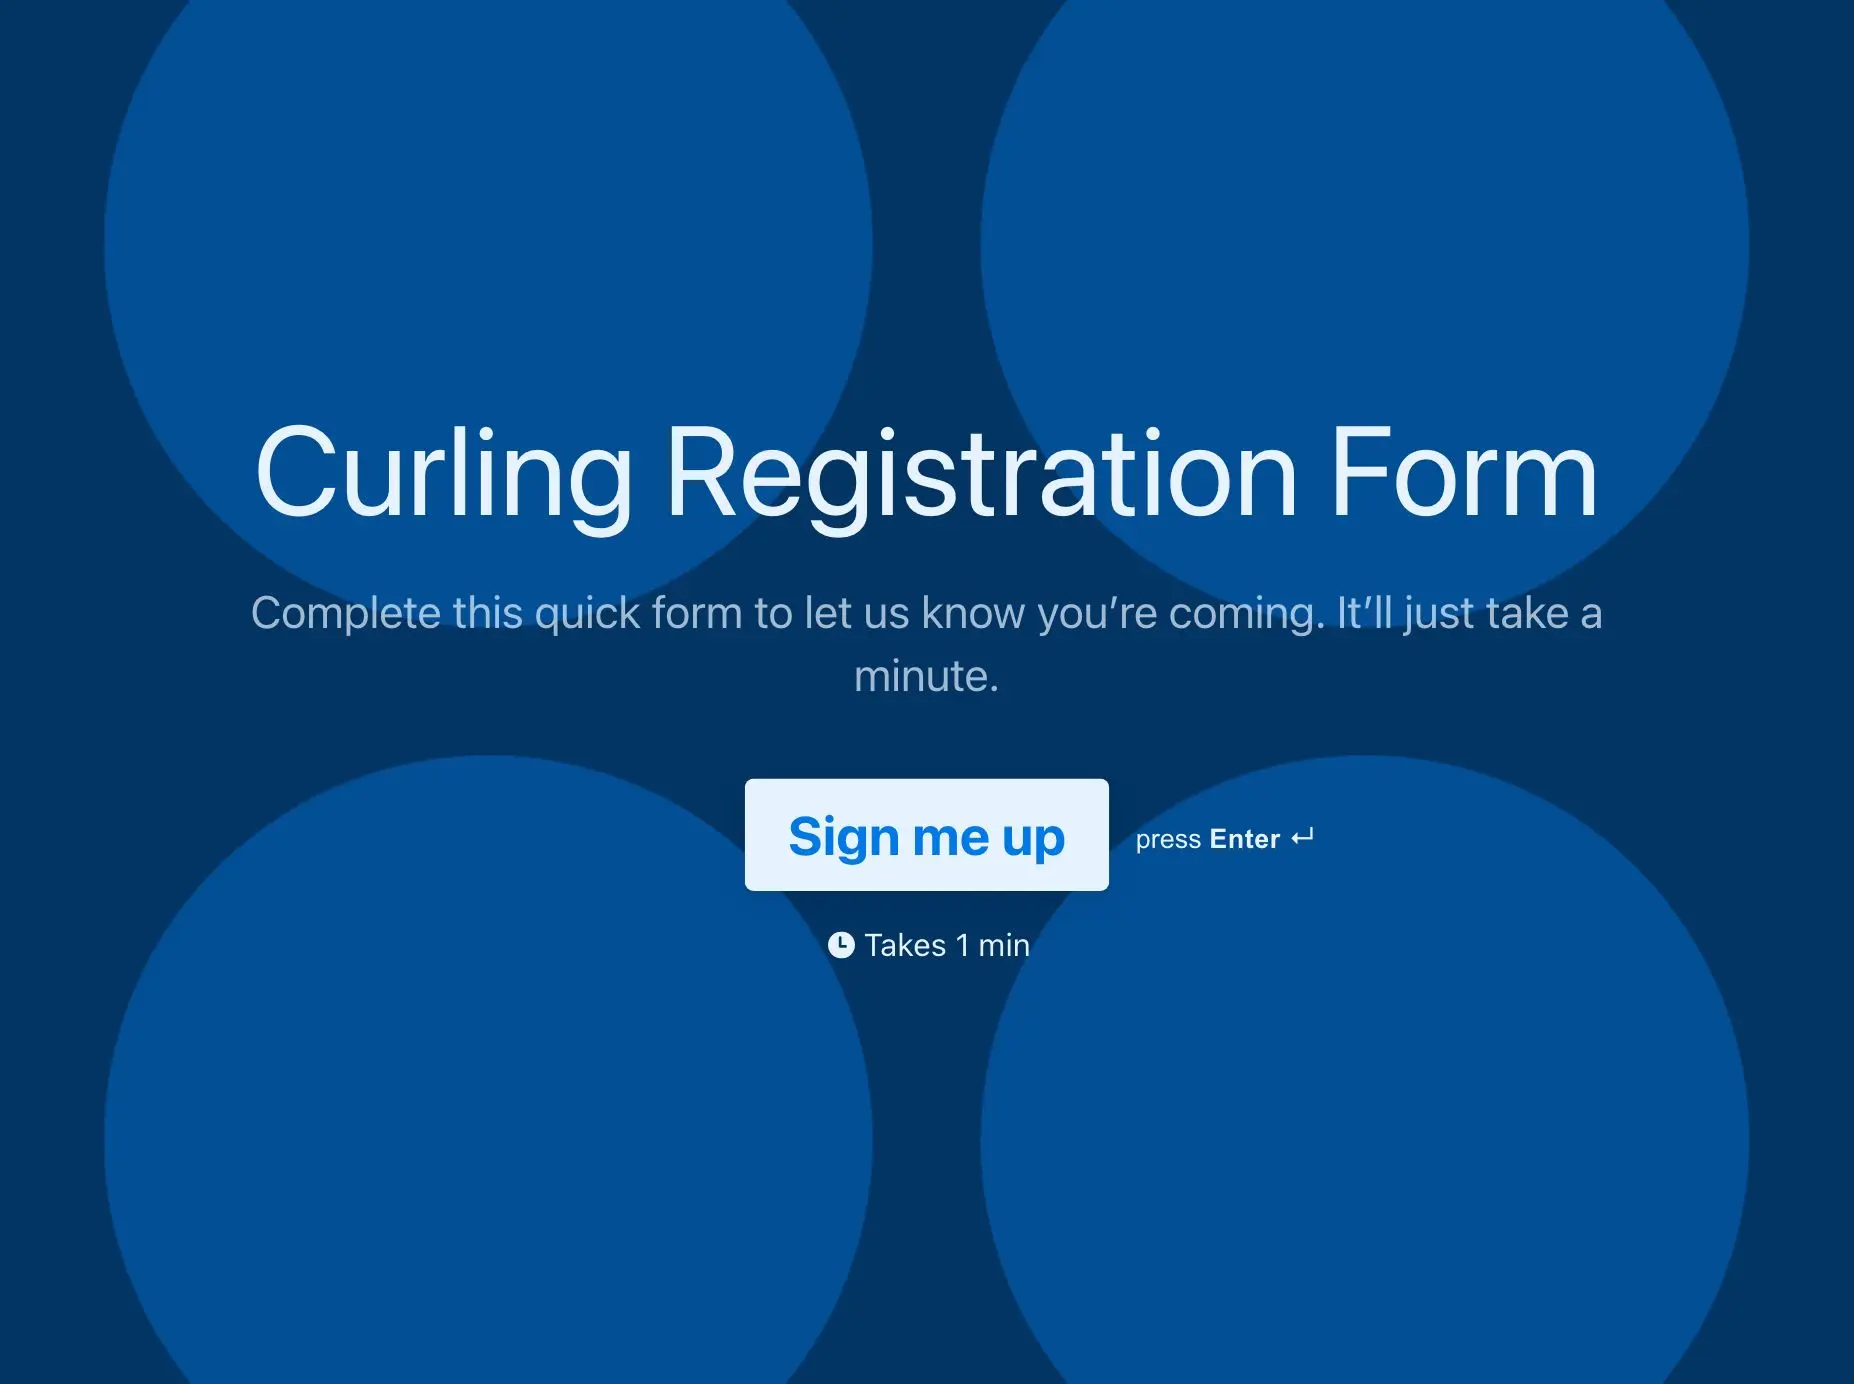 Curling Registration Form Template Hero